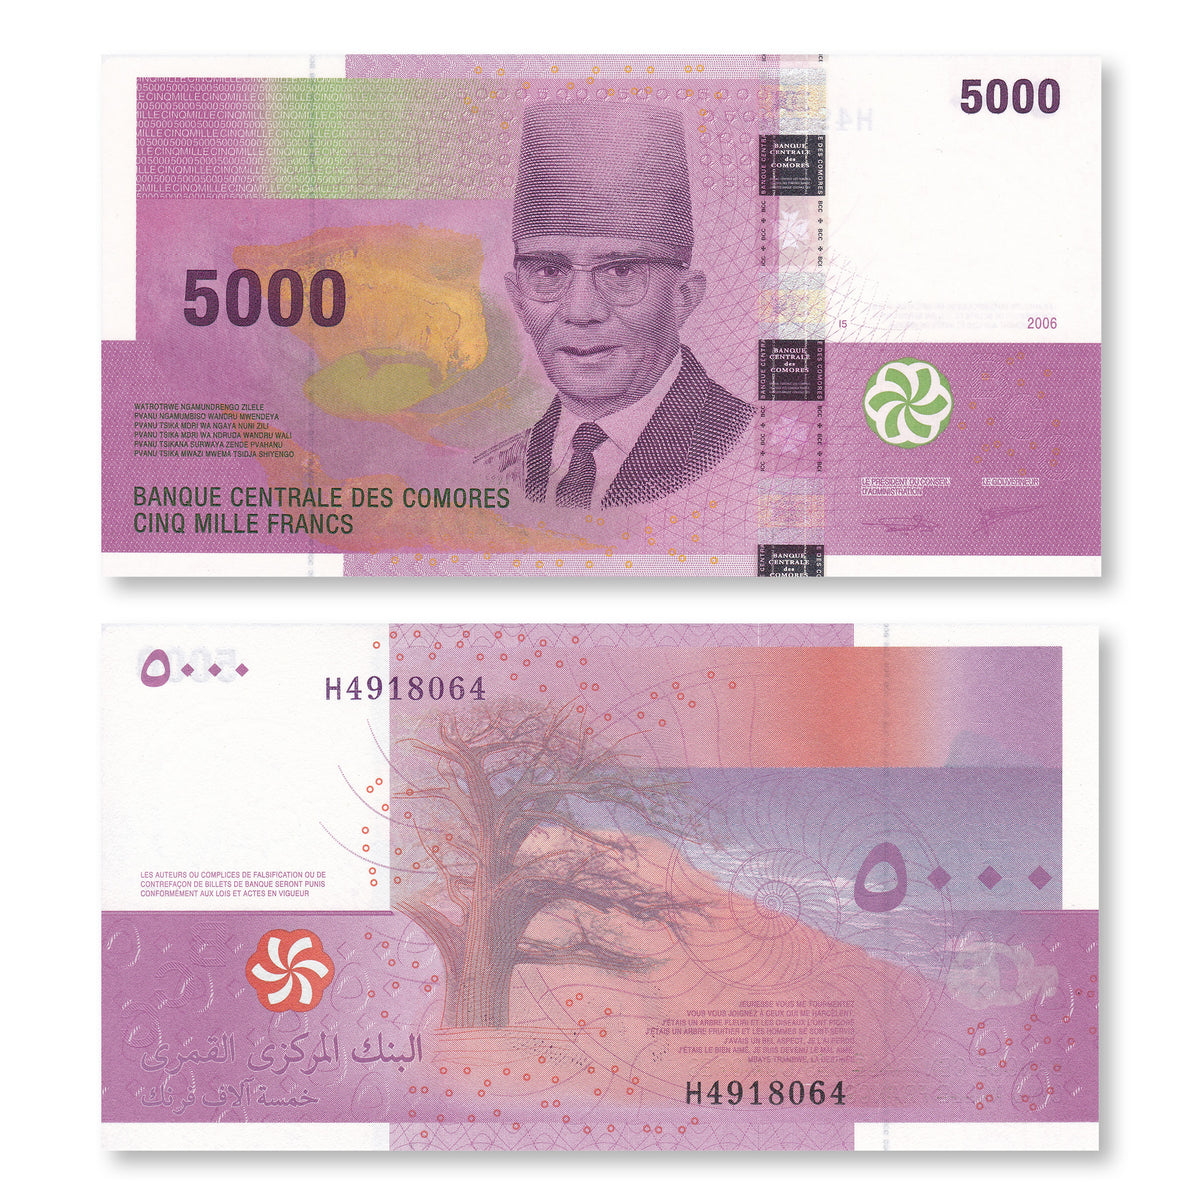 Comoros 5000 Francs, 2006 (2020), B309c, P18a, UNC - Robert's World Money - World Banknotes